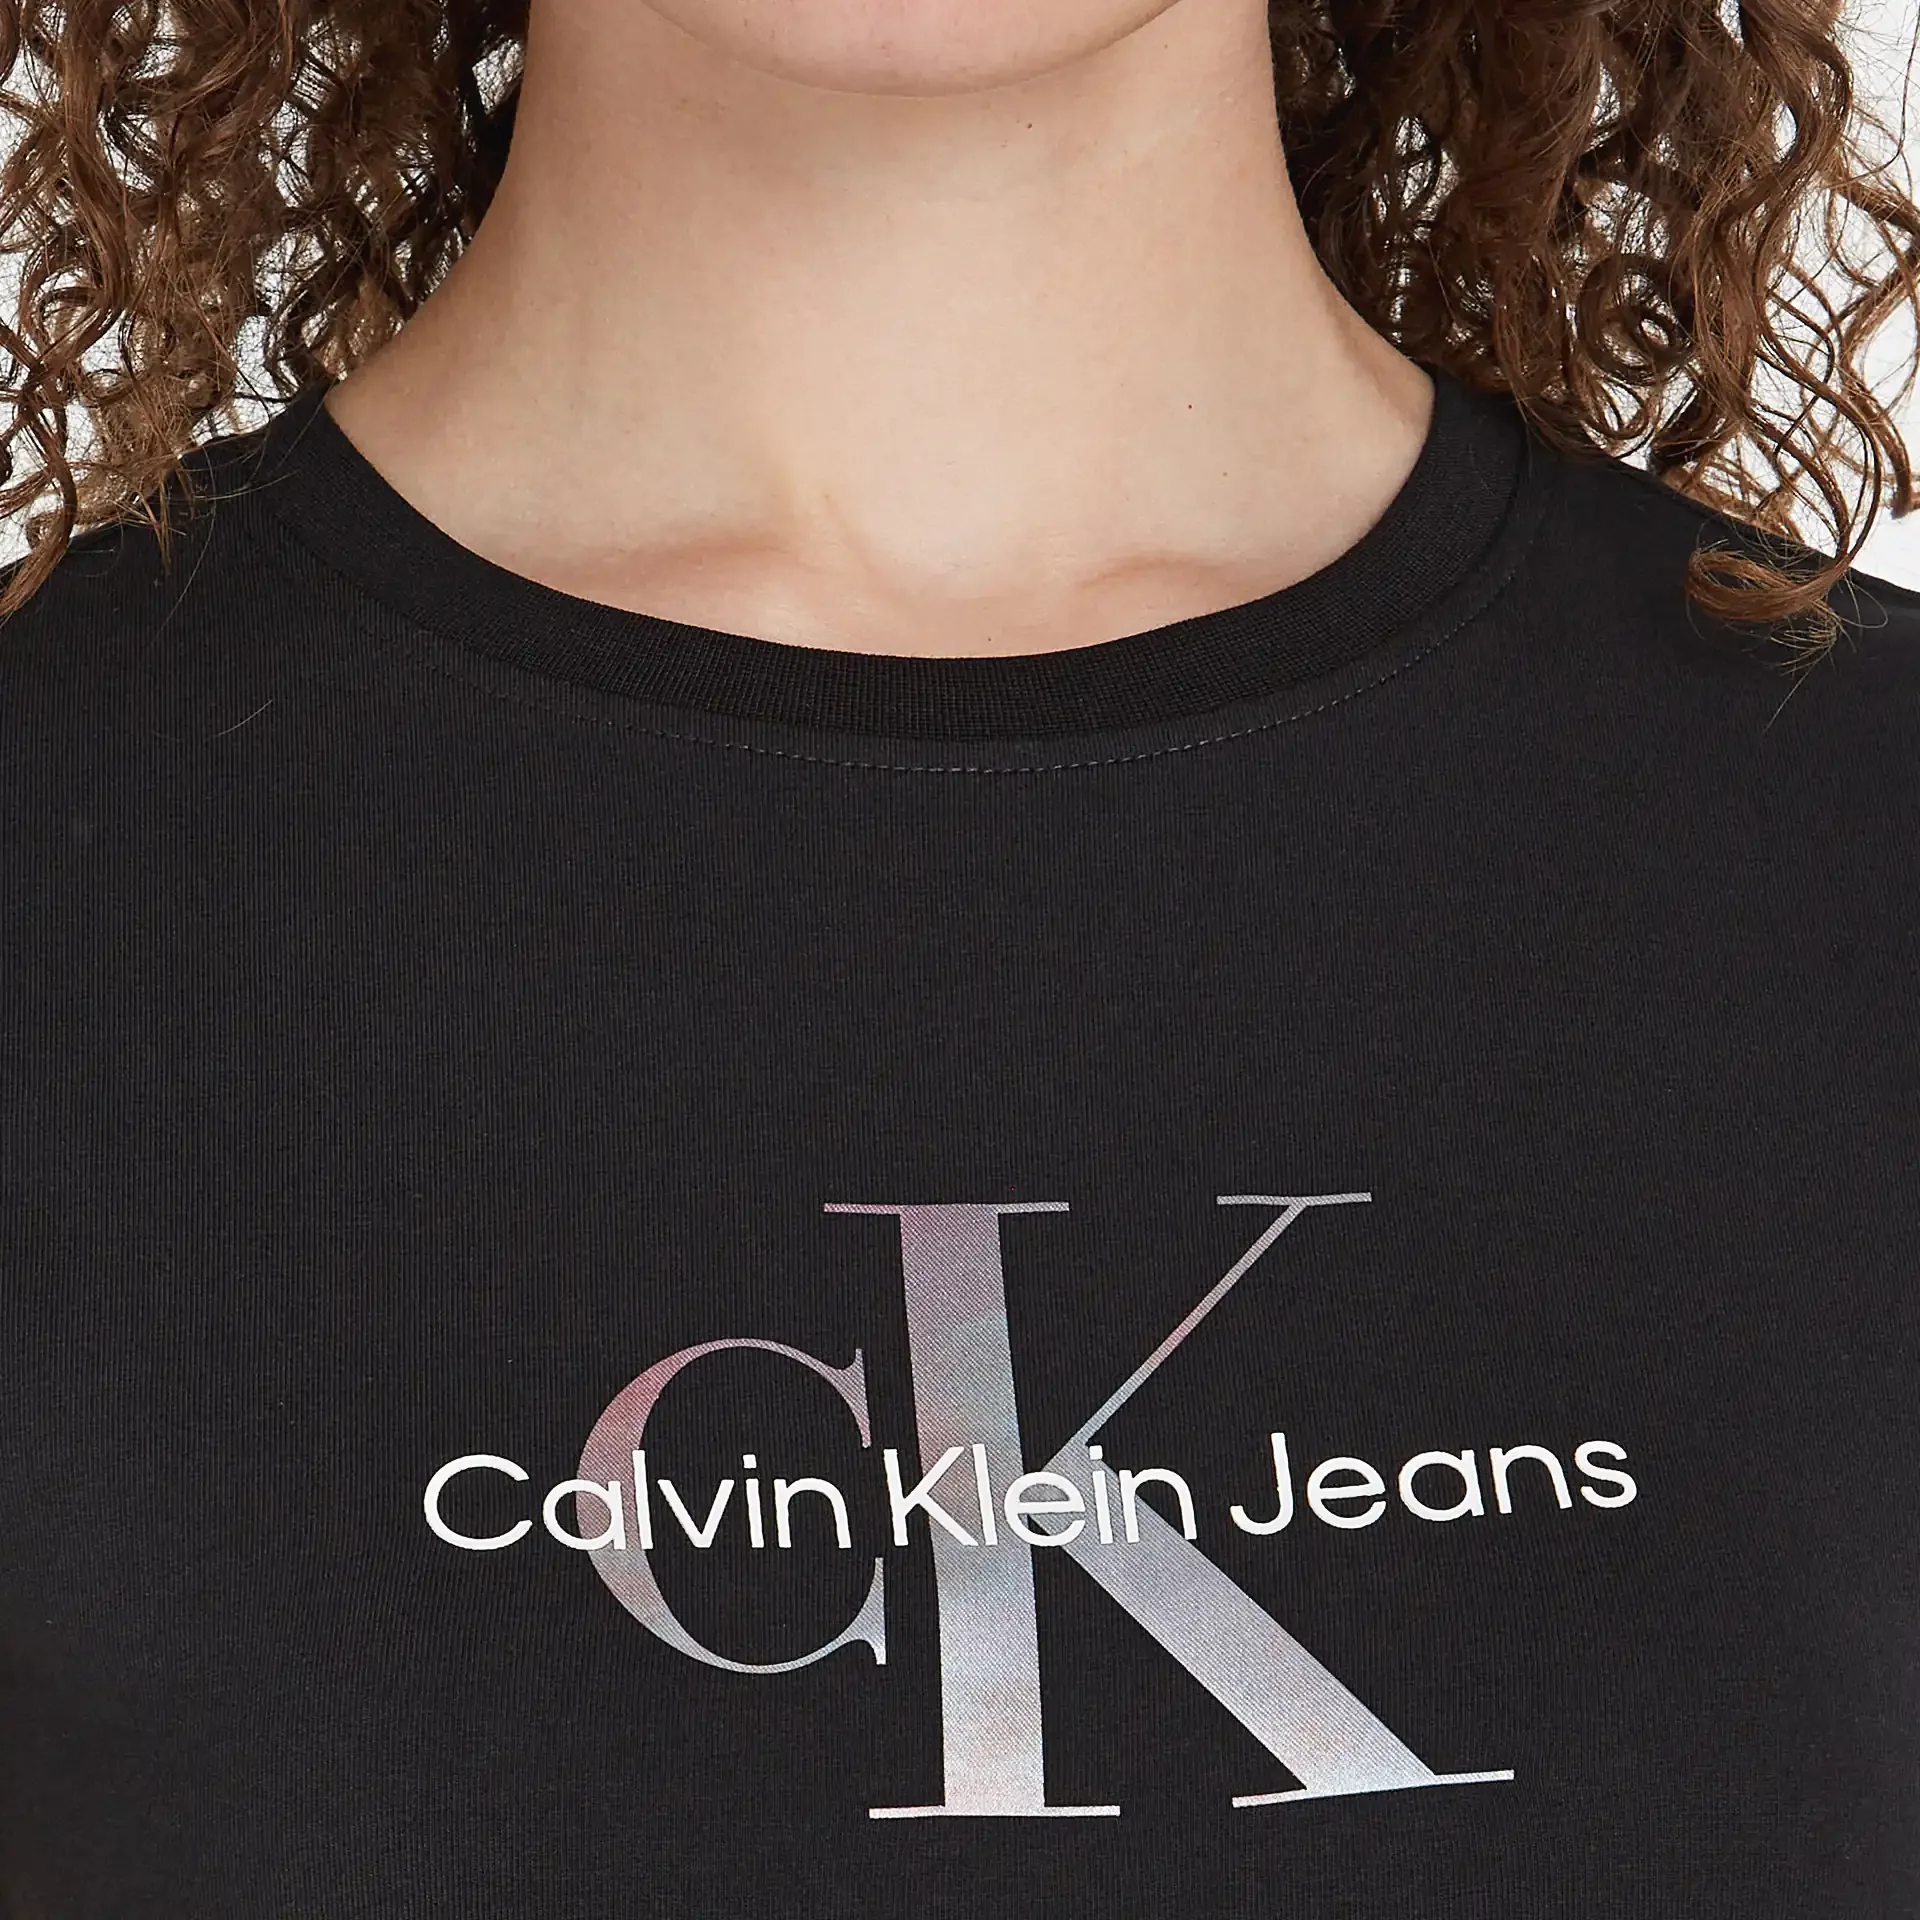 Calvin Klein Jeans Diffused Monologo Dress Black